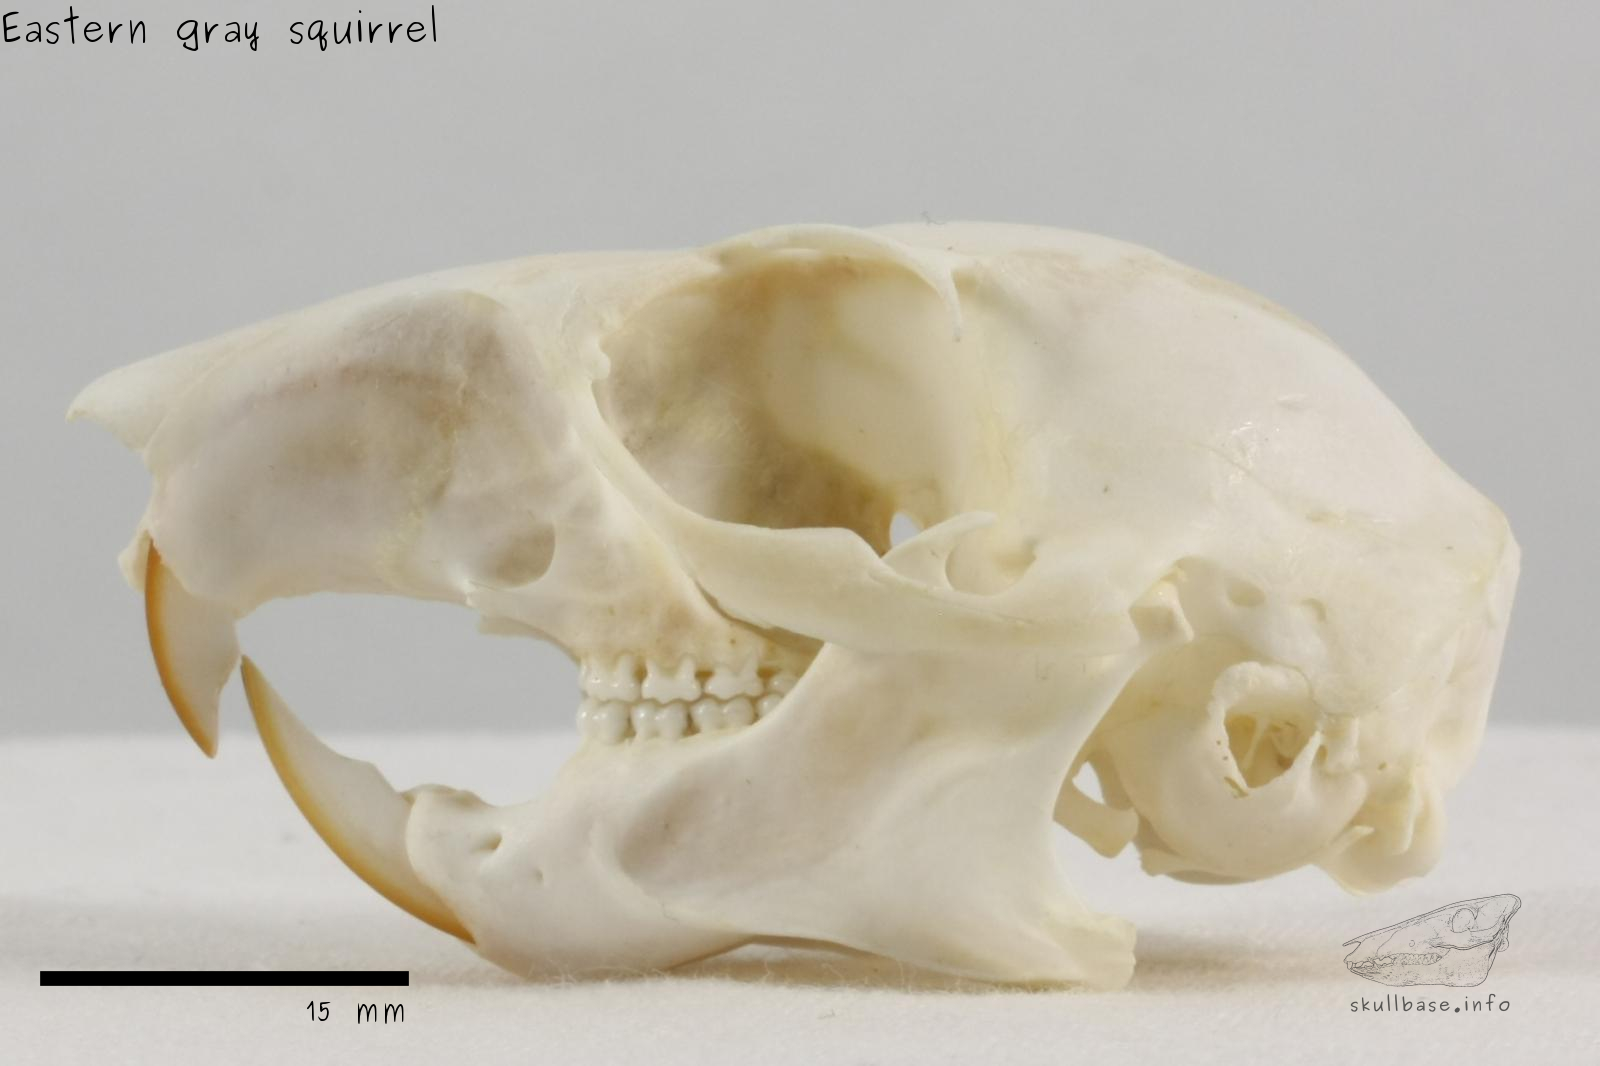 Eastern gray squirrel (Sciurus carolinensis) skull lateral view